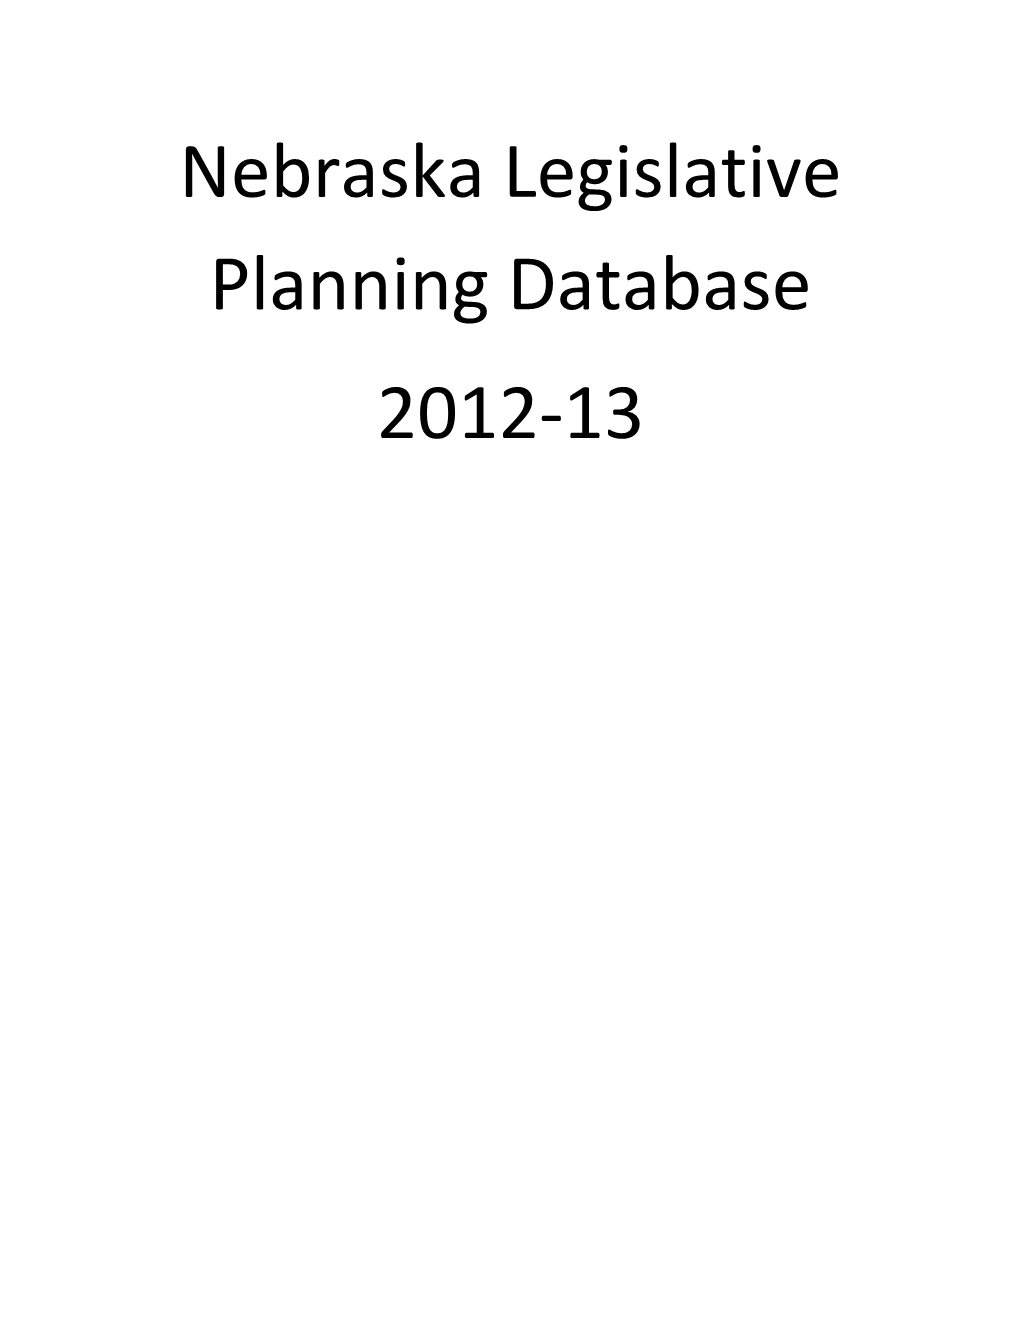 2012-2013 Legislature's Planning Committee